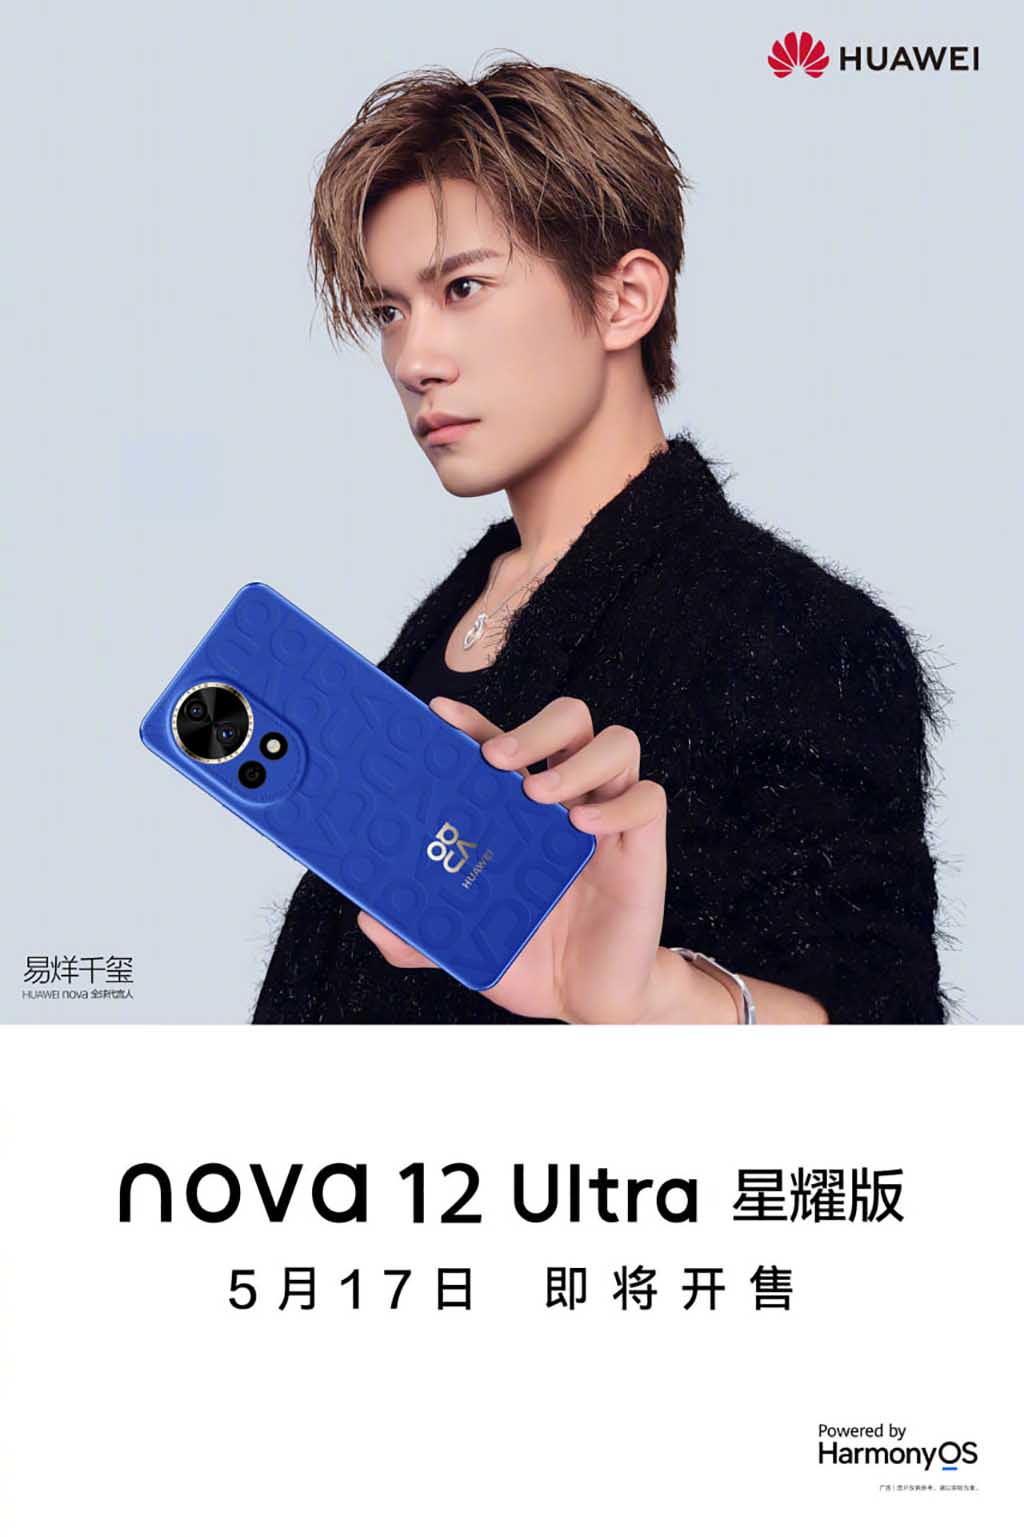 Huawei Nova 12 Ultra Star Edition